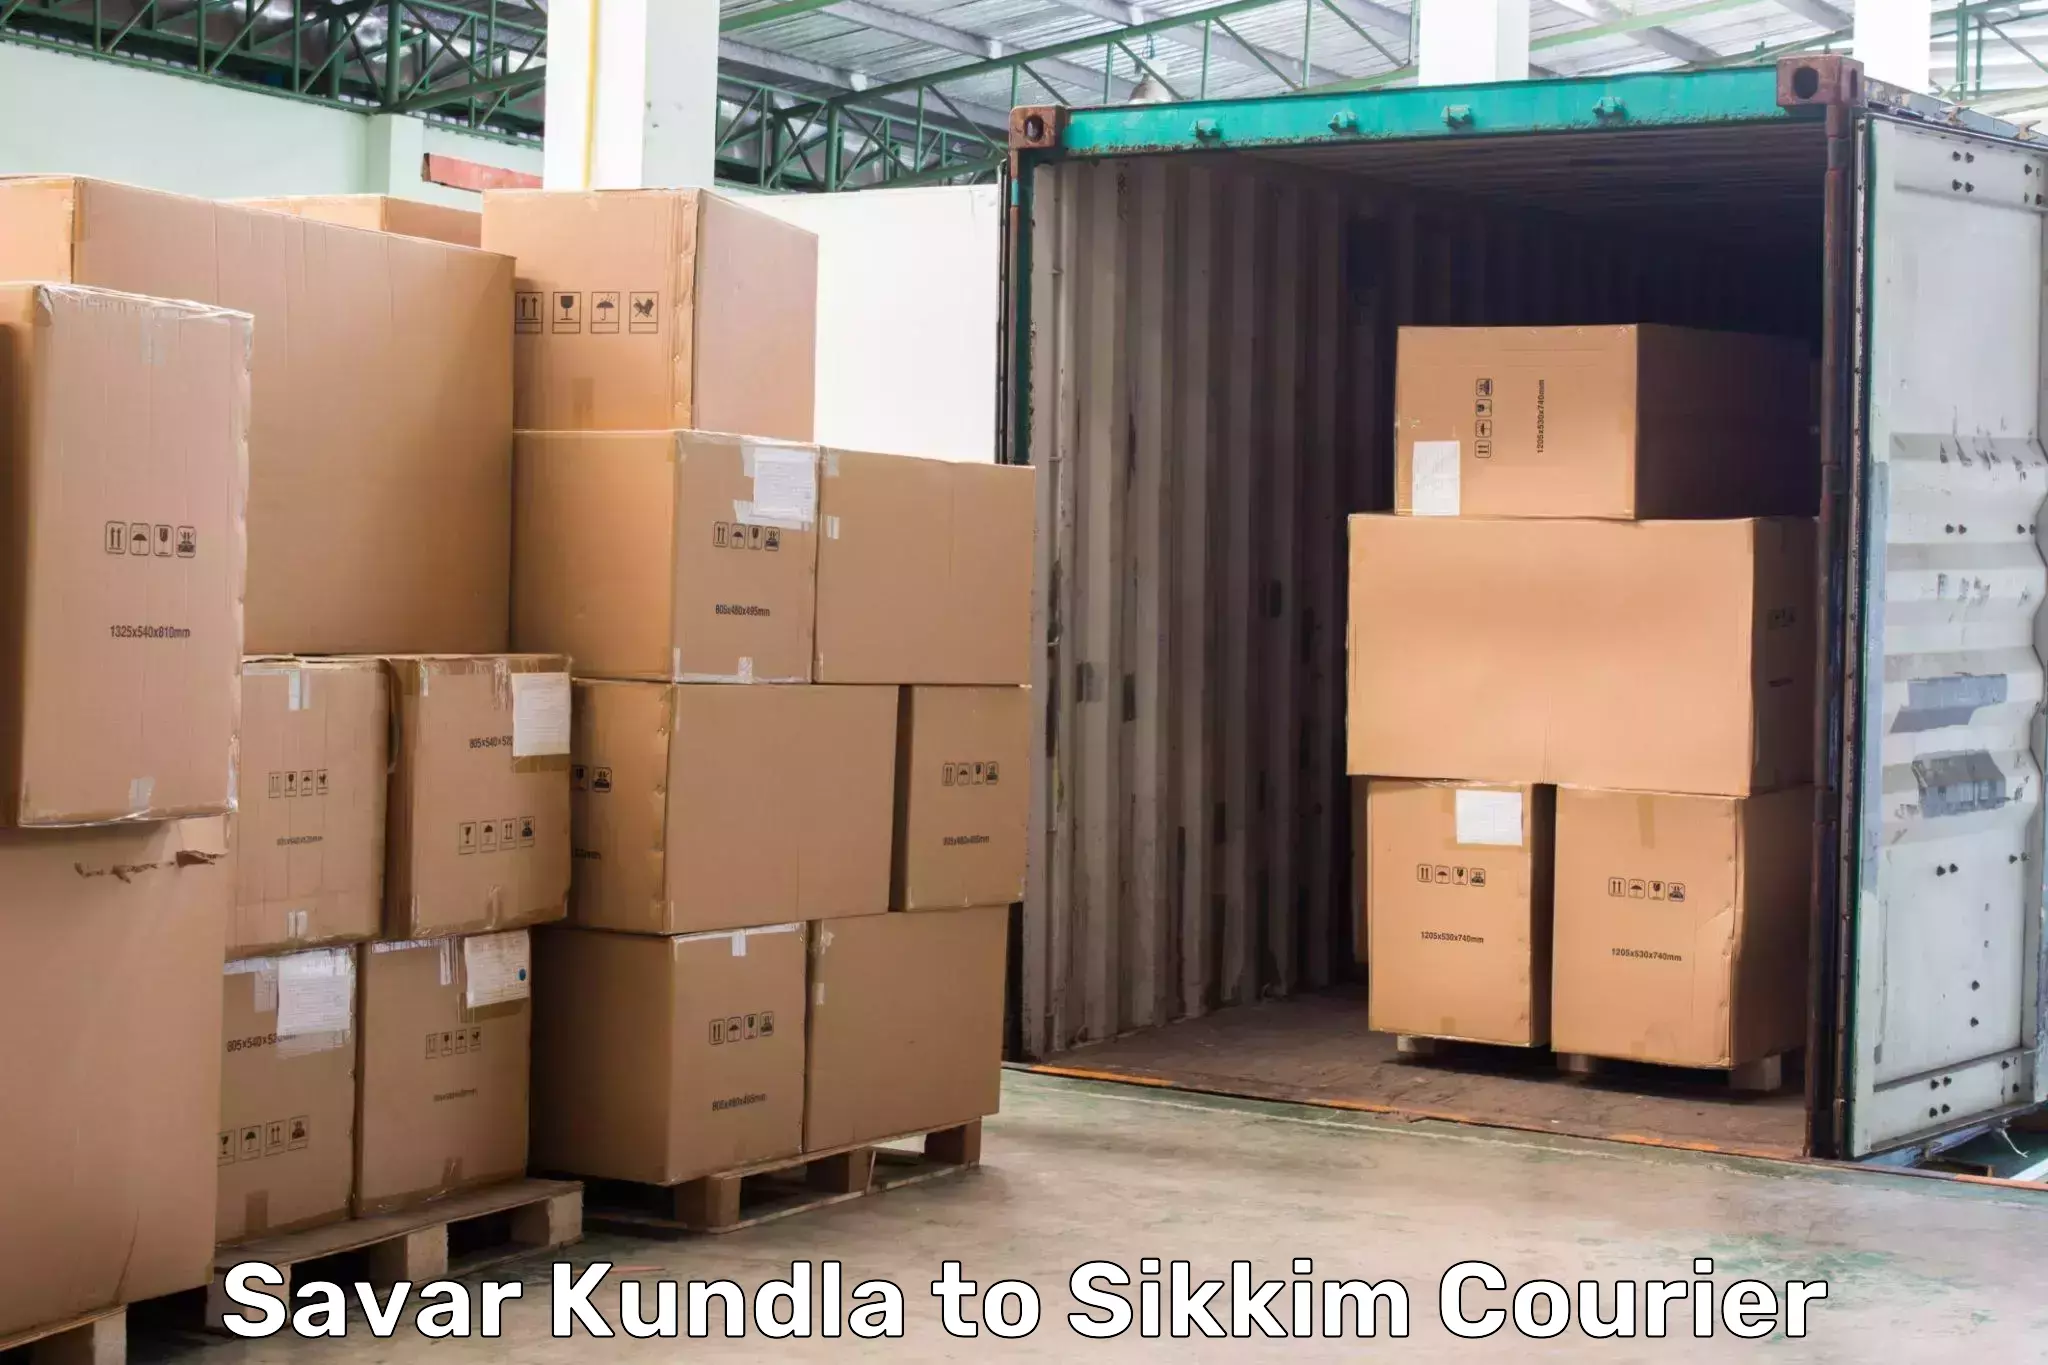 Reliable parcel services Savar Kundla to Pelling